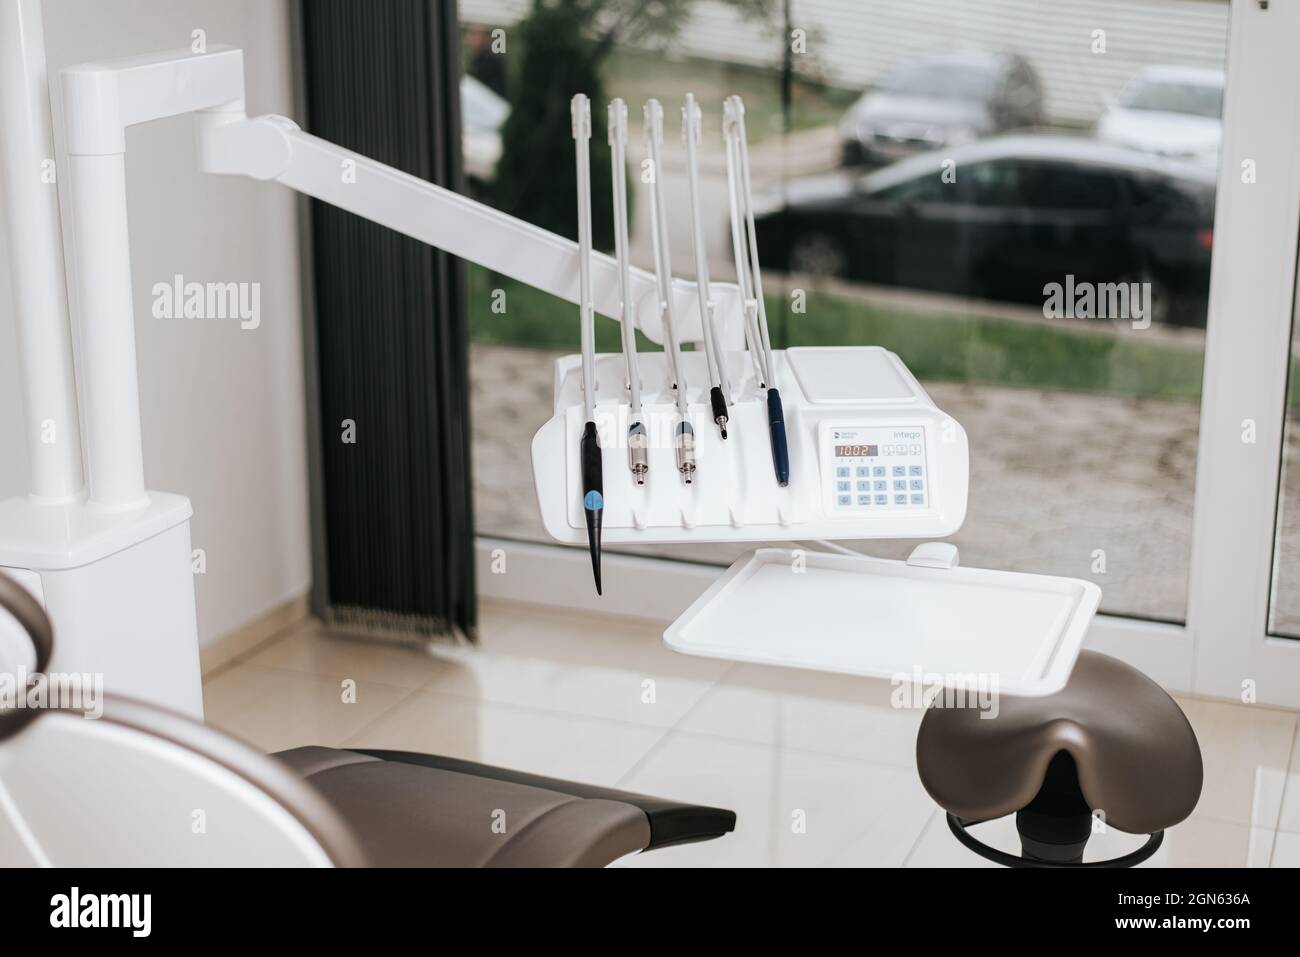 Sarajevo, Bosnia and Herzegovina - 09.20.2021: Dentsply Sirona Sinius machine Intego, treatment center in a dental office close up Stock Photo